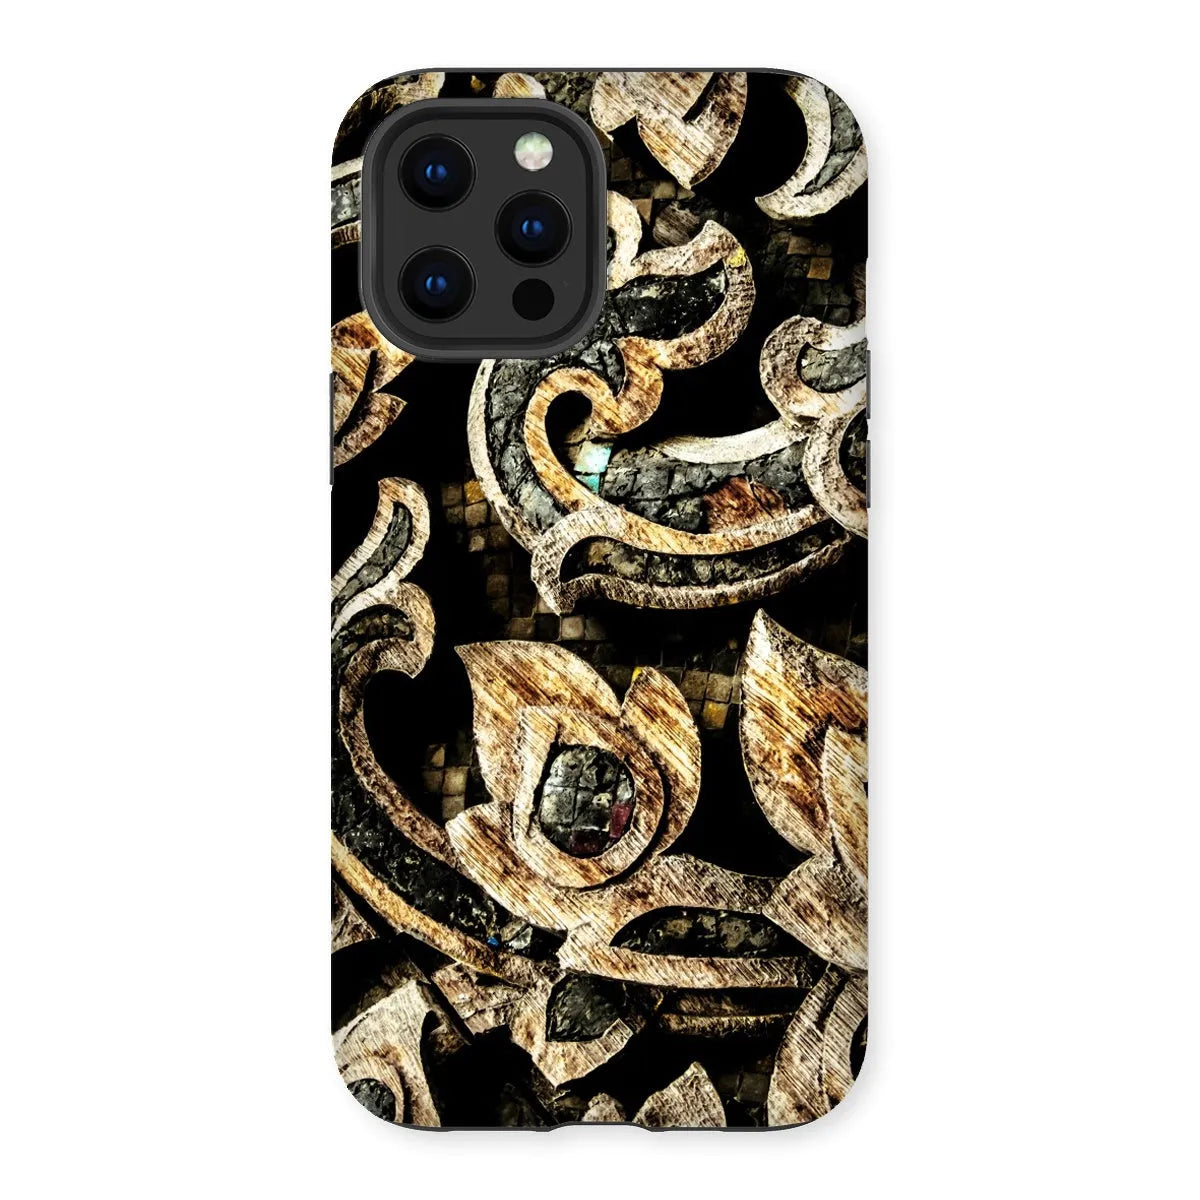 Against The Grain Tough Phone Case - Iphone 12 Pro Max / Matte - Mobile Phone Cases - Aesthetic Art